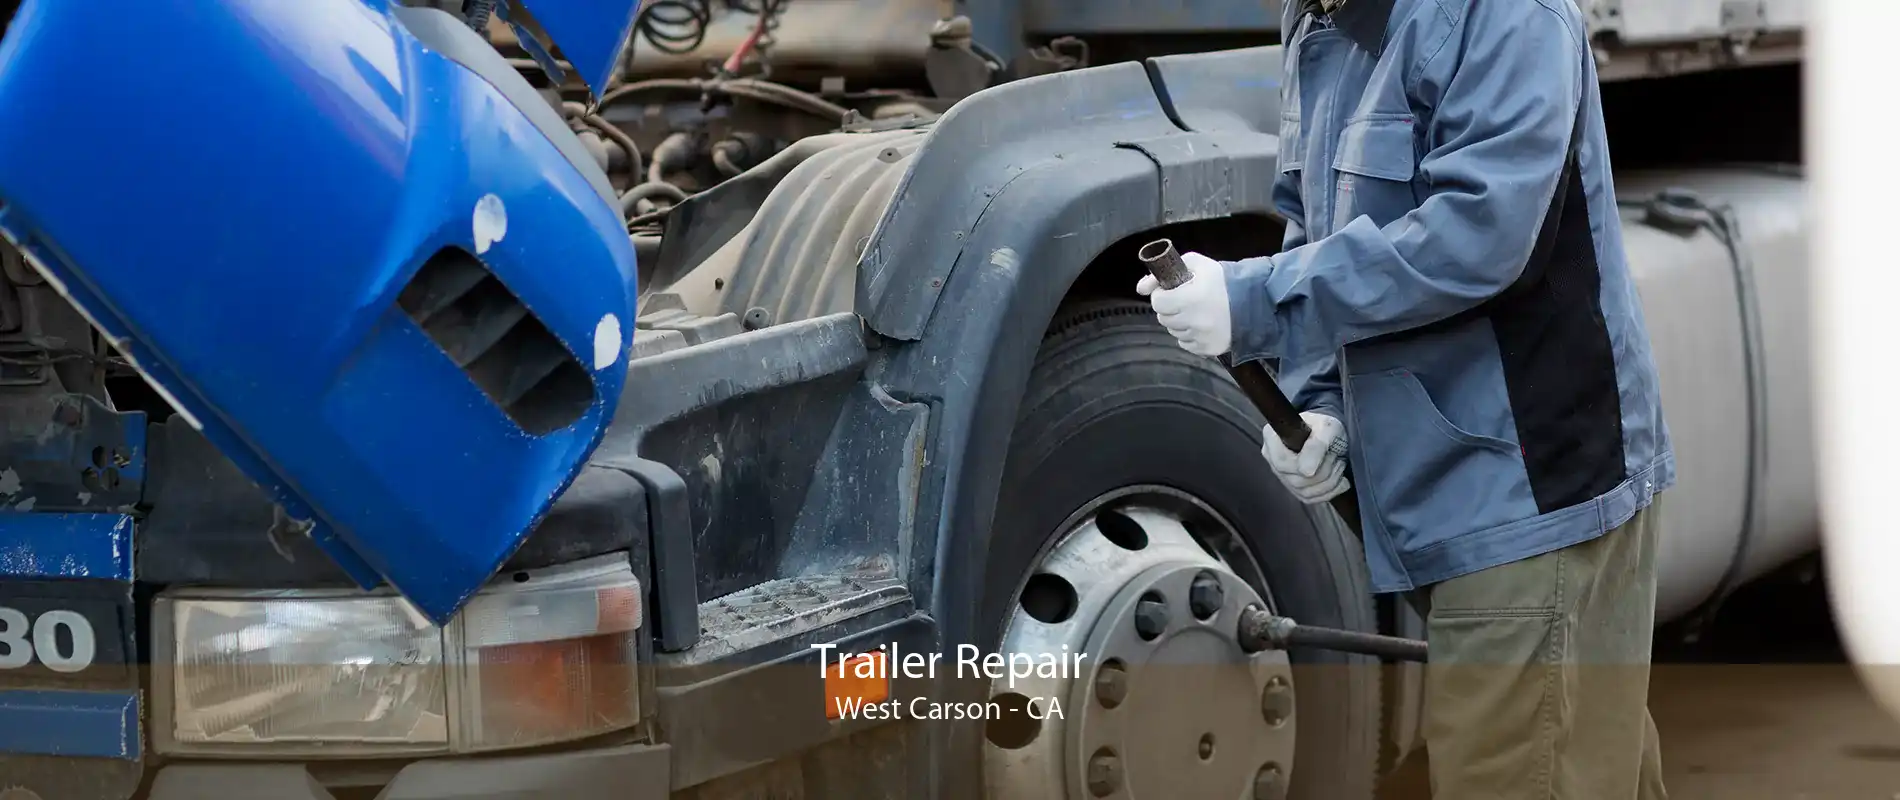 Trailer Repair West Carson - CA